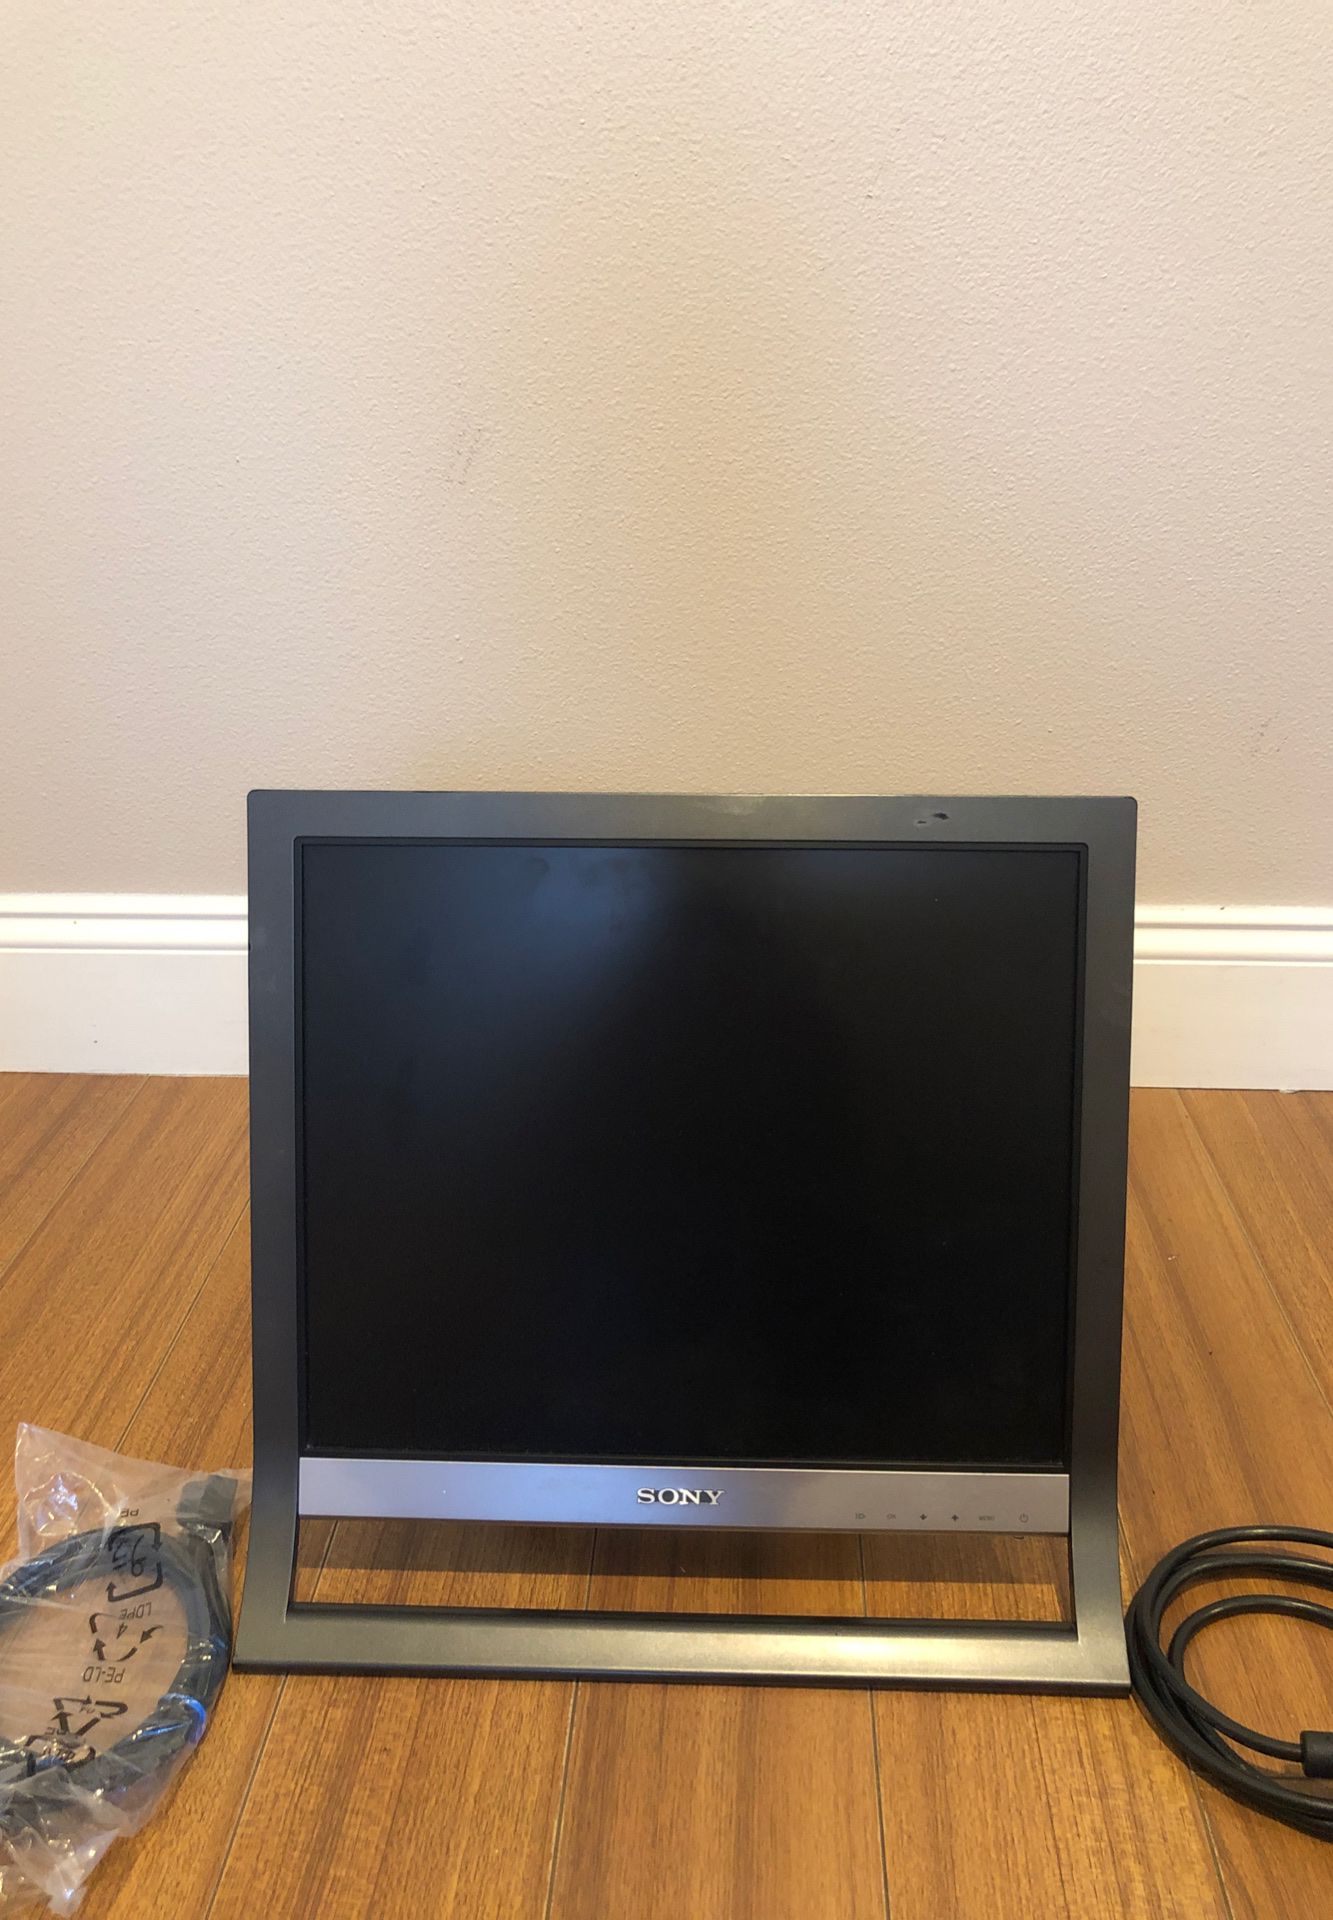 SONY 17 inch computer monitor